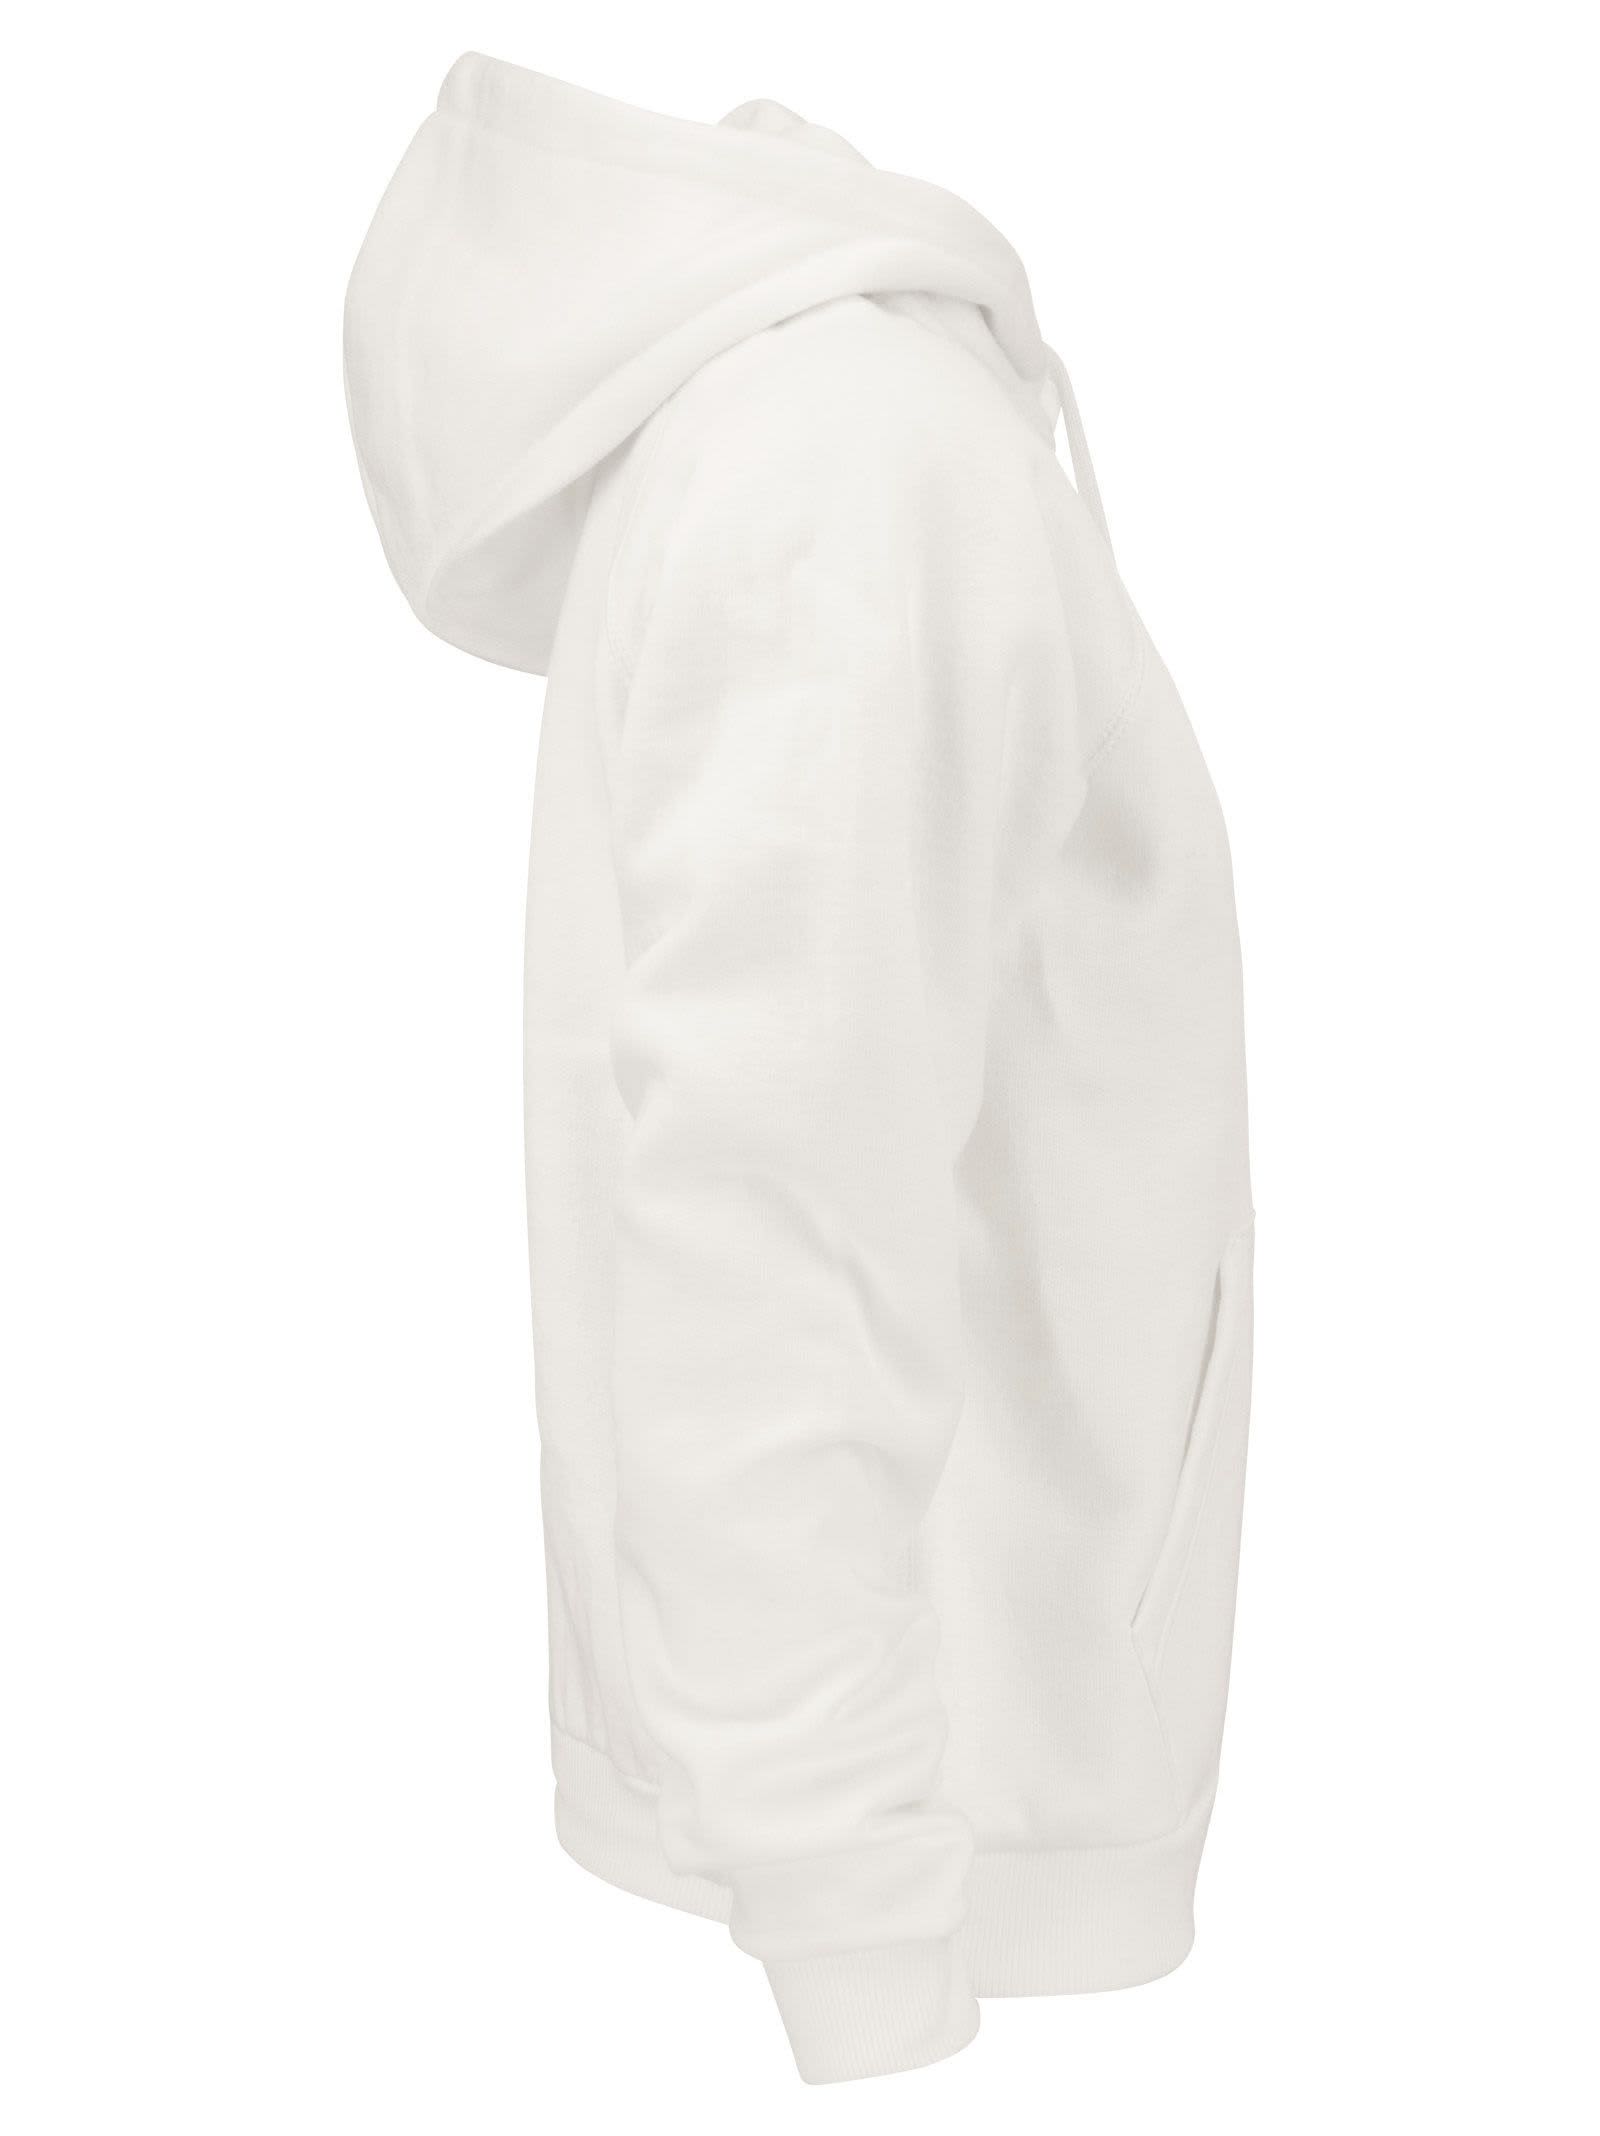 Shop Polo Ralph Lauren Hooded Sweatshirt In White